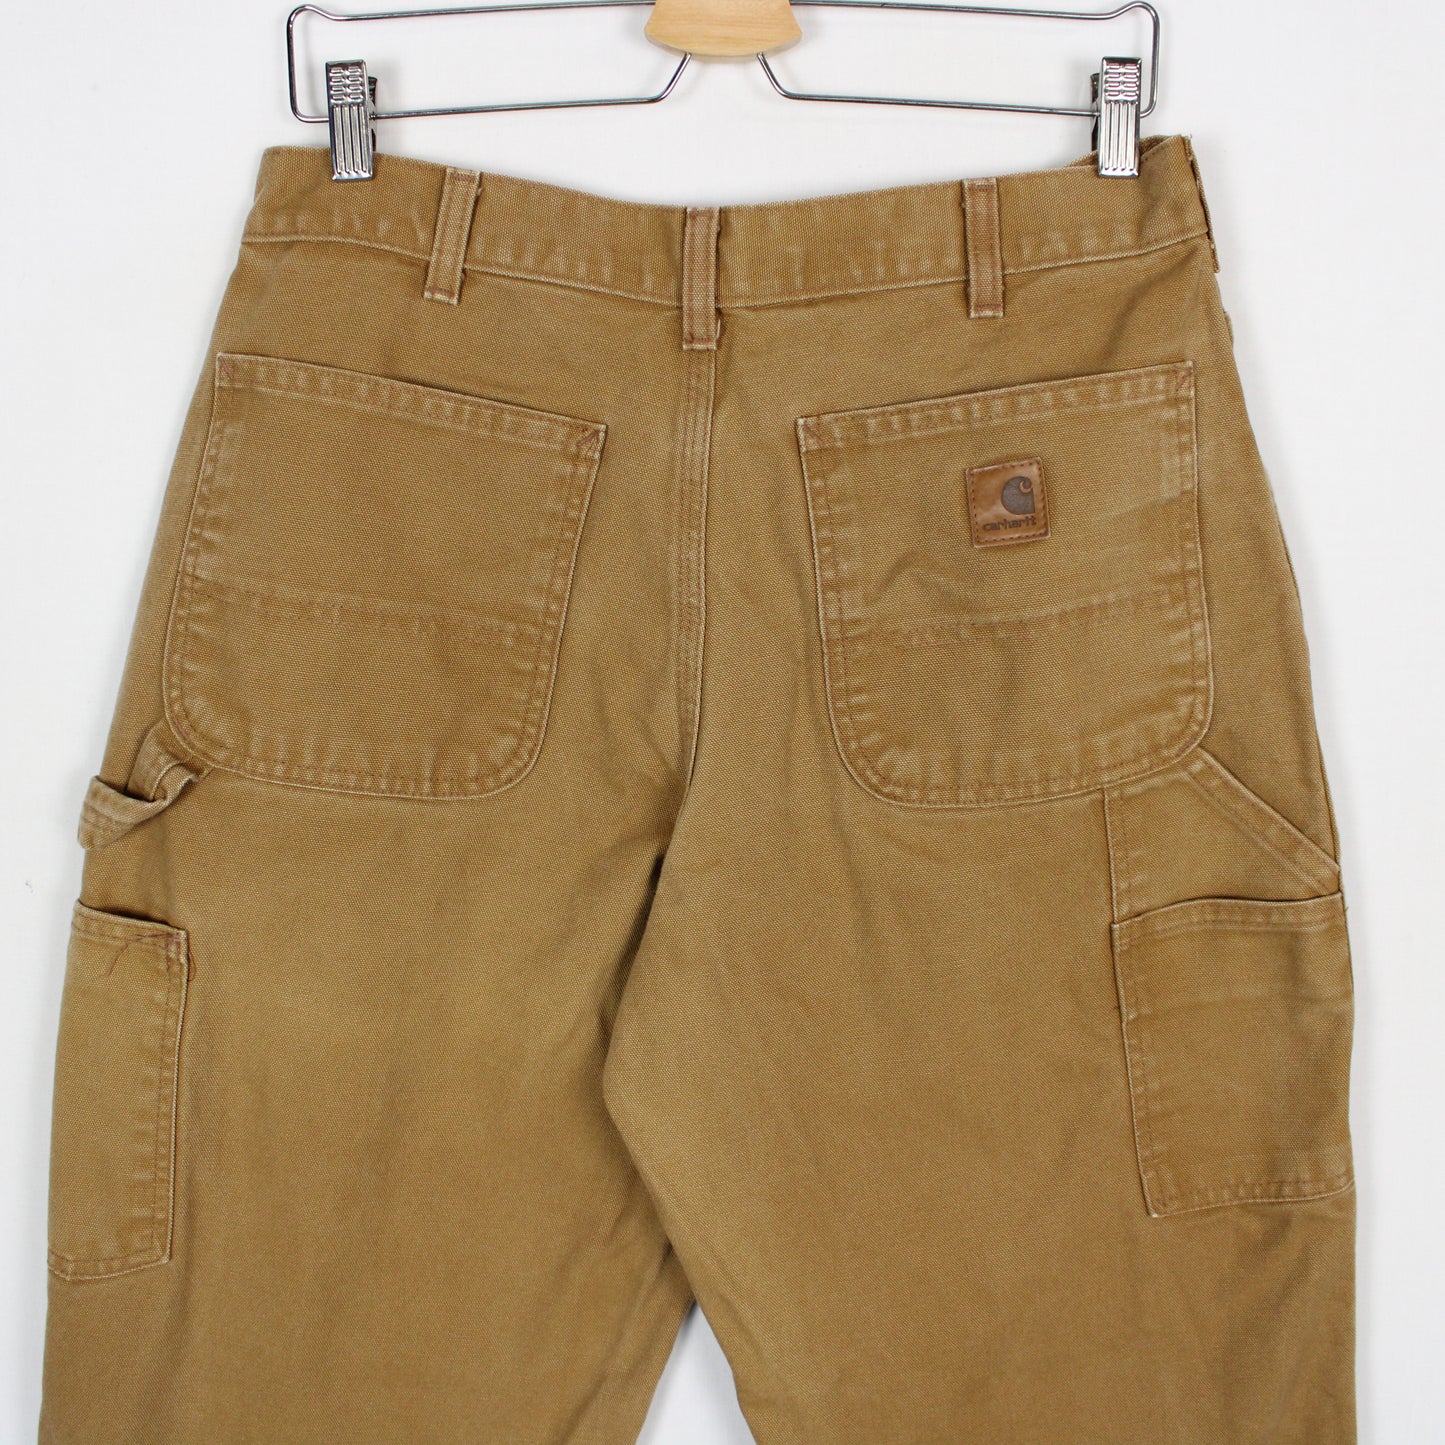 Vintage Carhartt Carpenter Pants - 32x30"